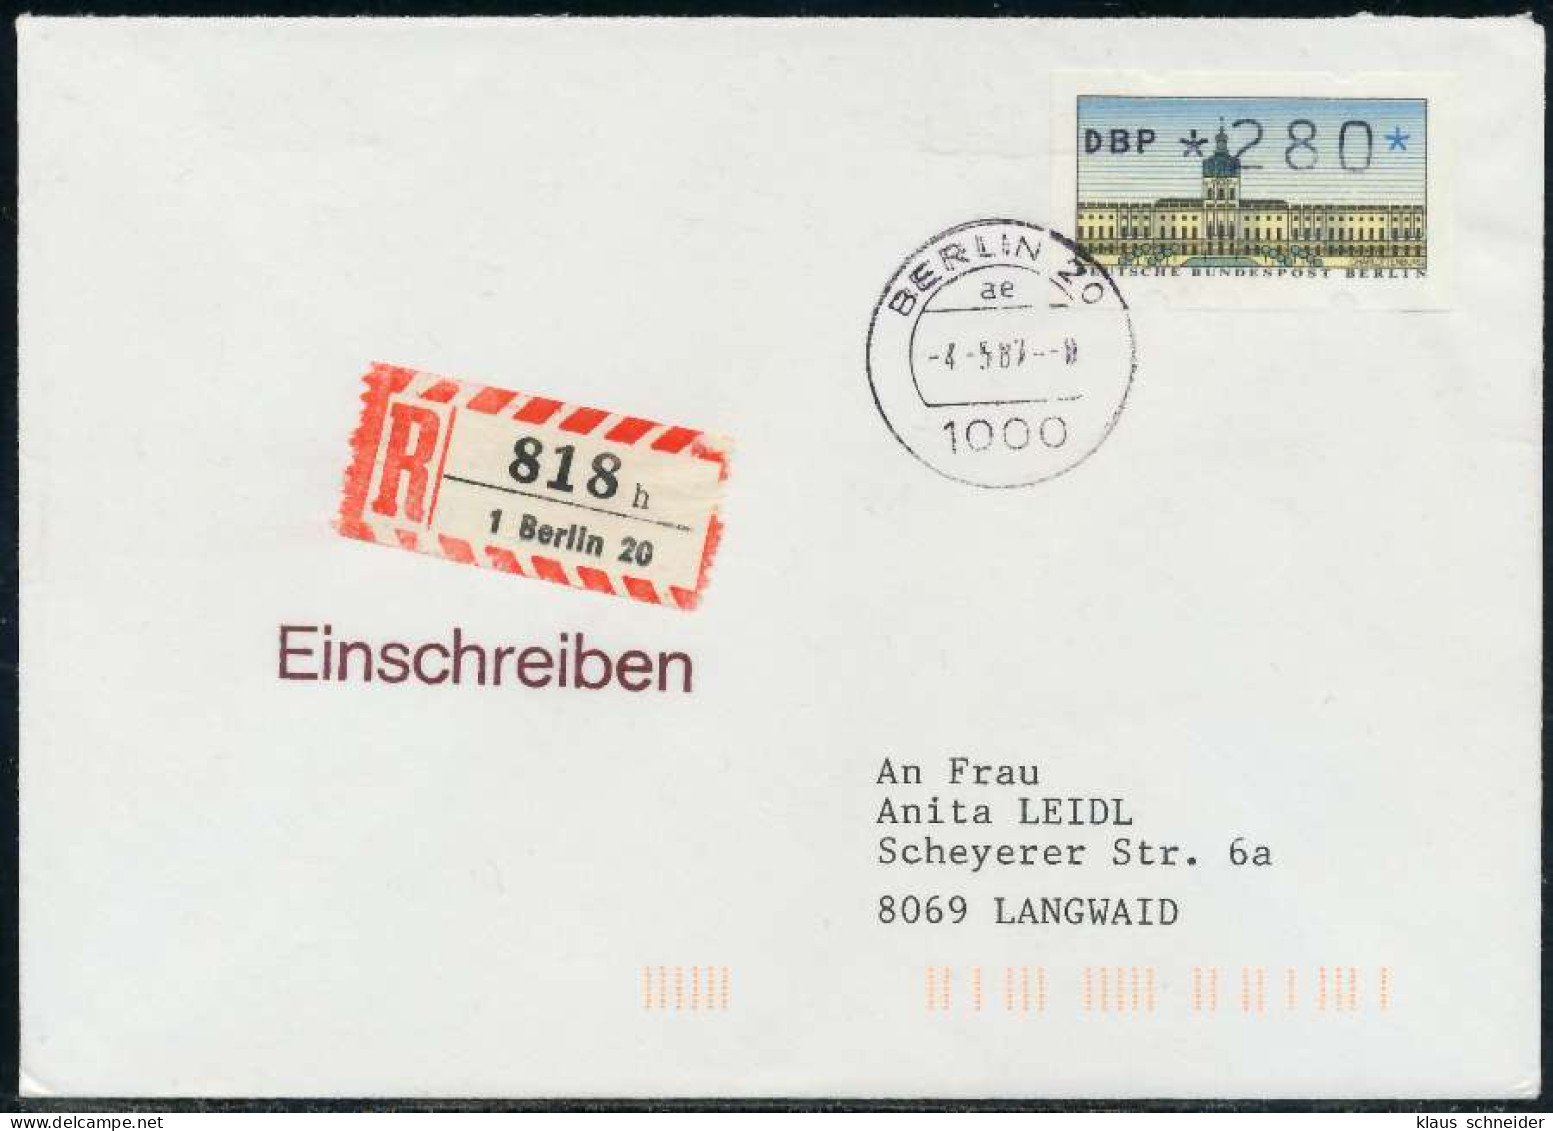 BERLIN ATM 1-280 BRIEF EINSCHREIBEN FDC X7E469A - Lettres & Documents